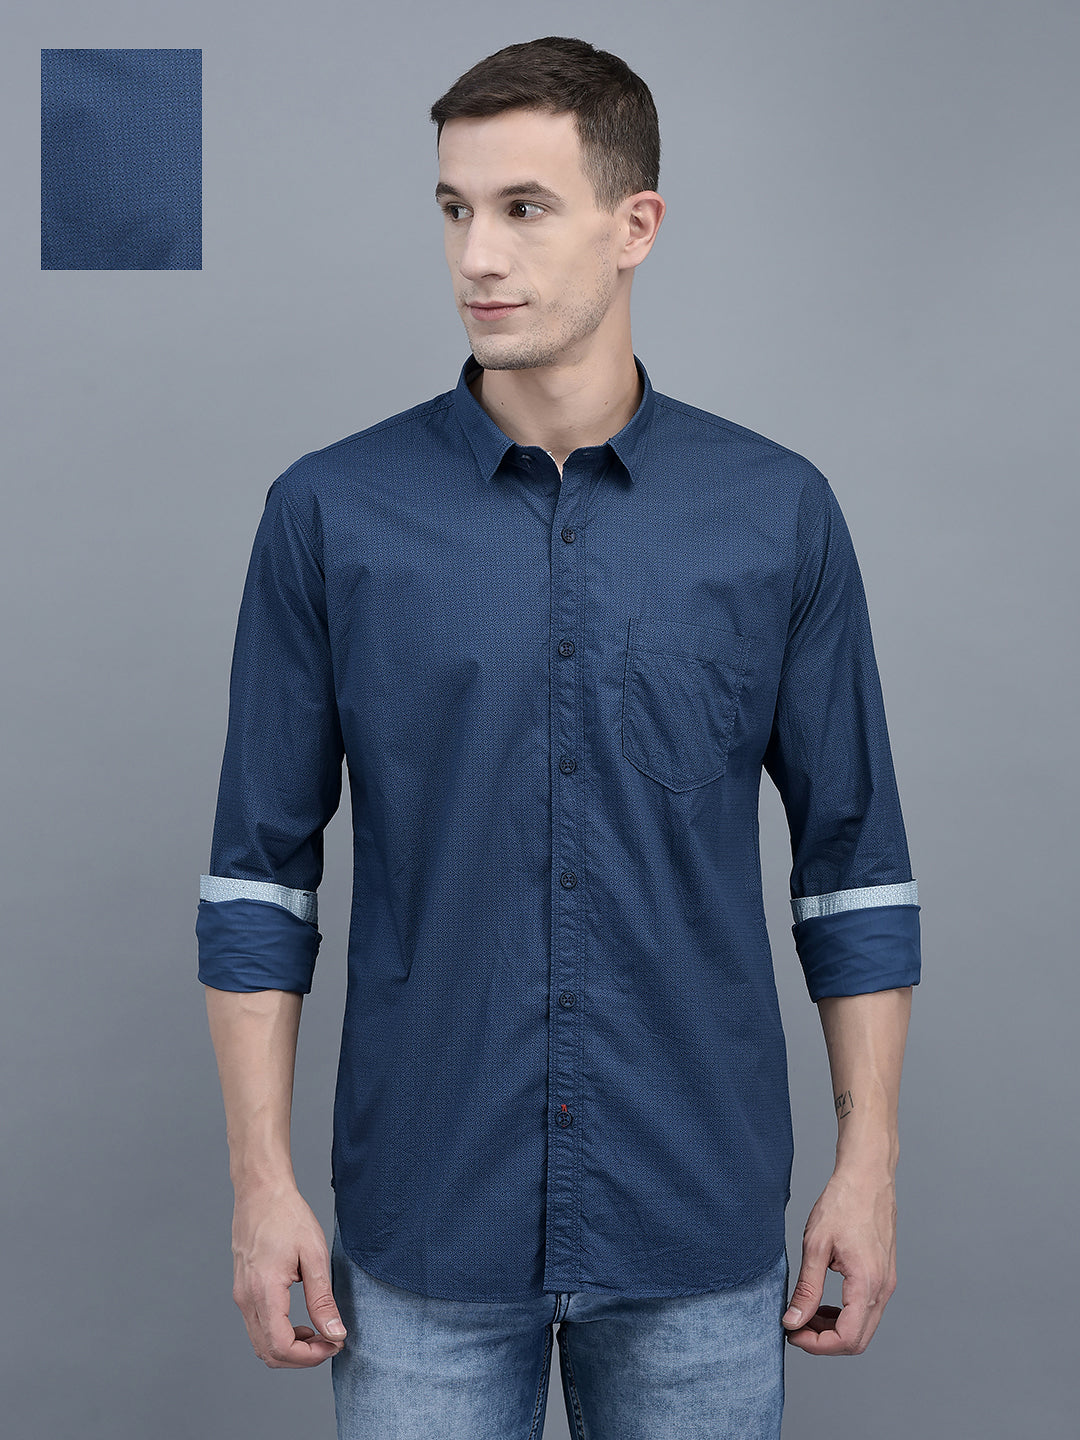 Cobb Navy Blue Printed Slim Fit Casual Shirt Navy Blue